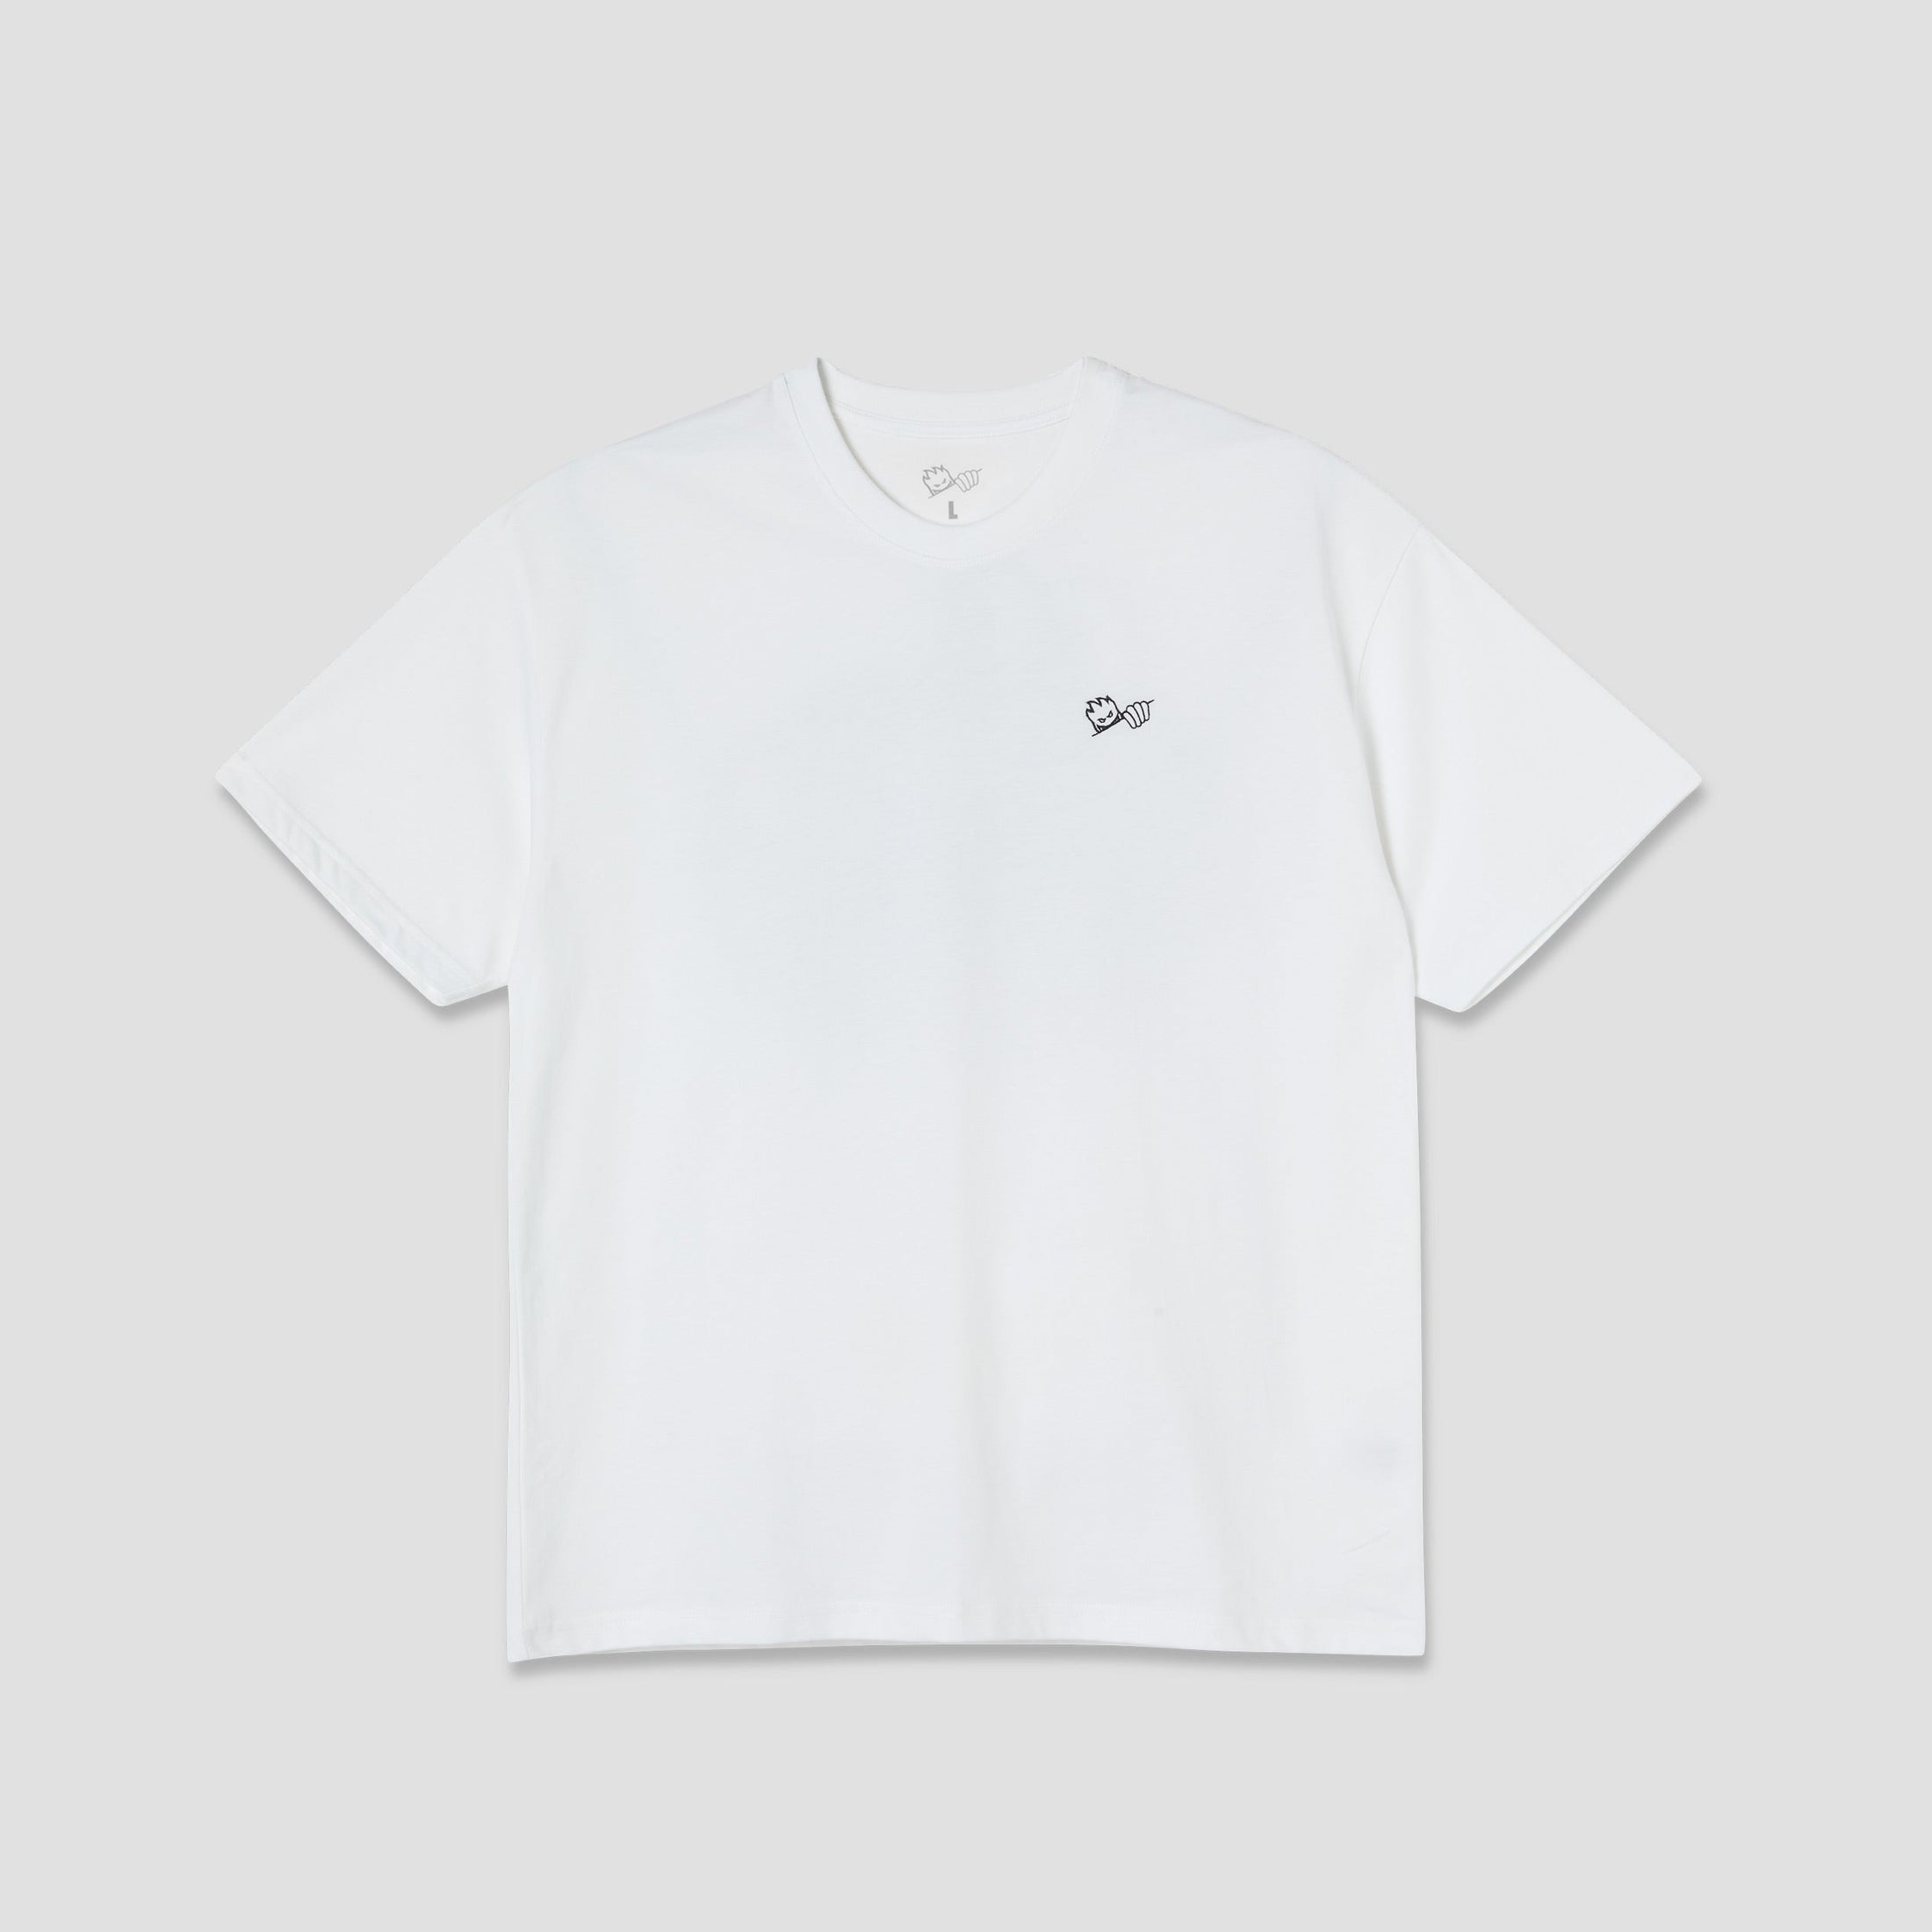 Last Resort AB x Spitfire Swirl T-Shirt White